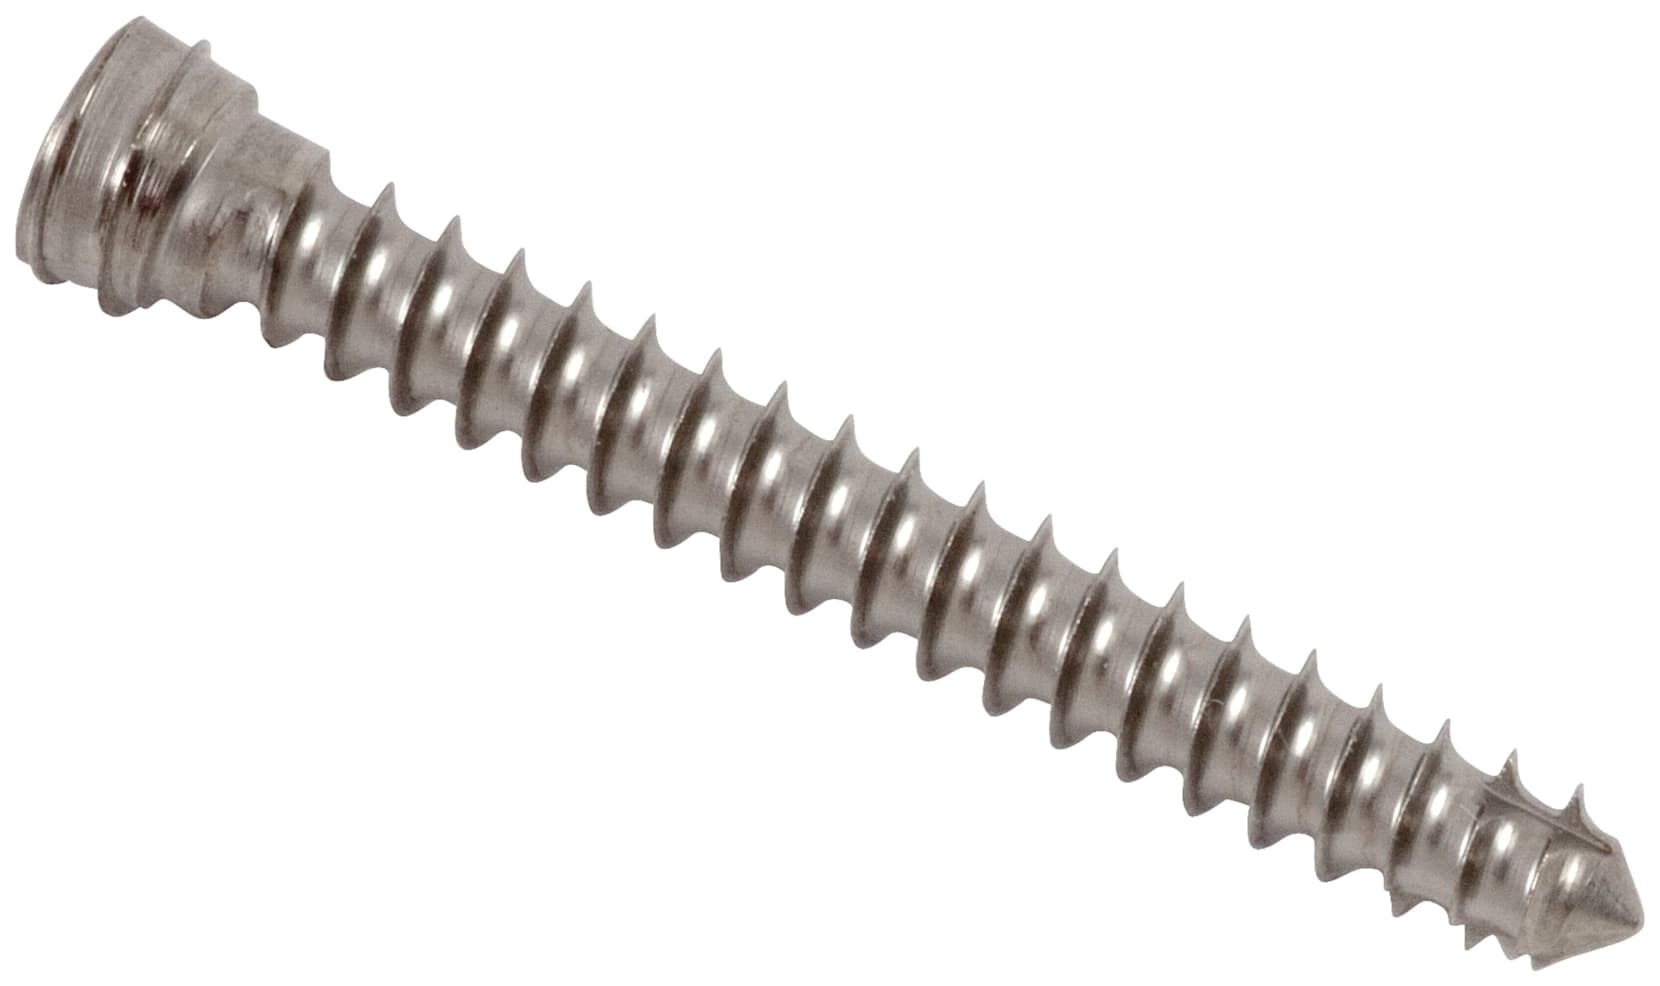 Cortical Locking Screw, 3.5 mm x 30 mm